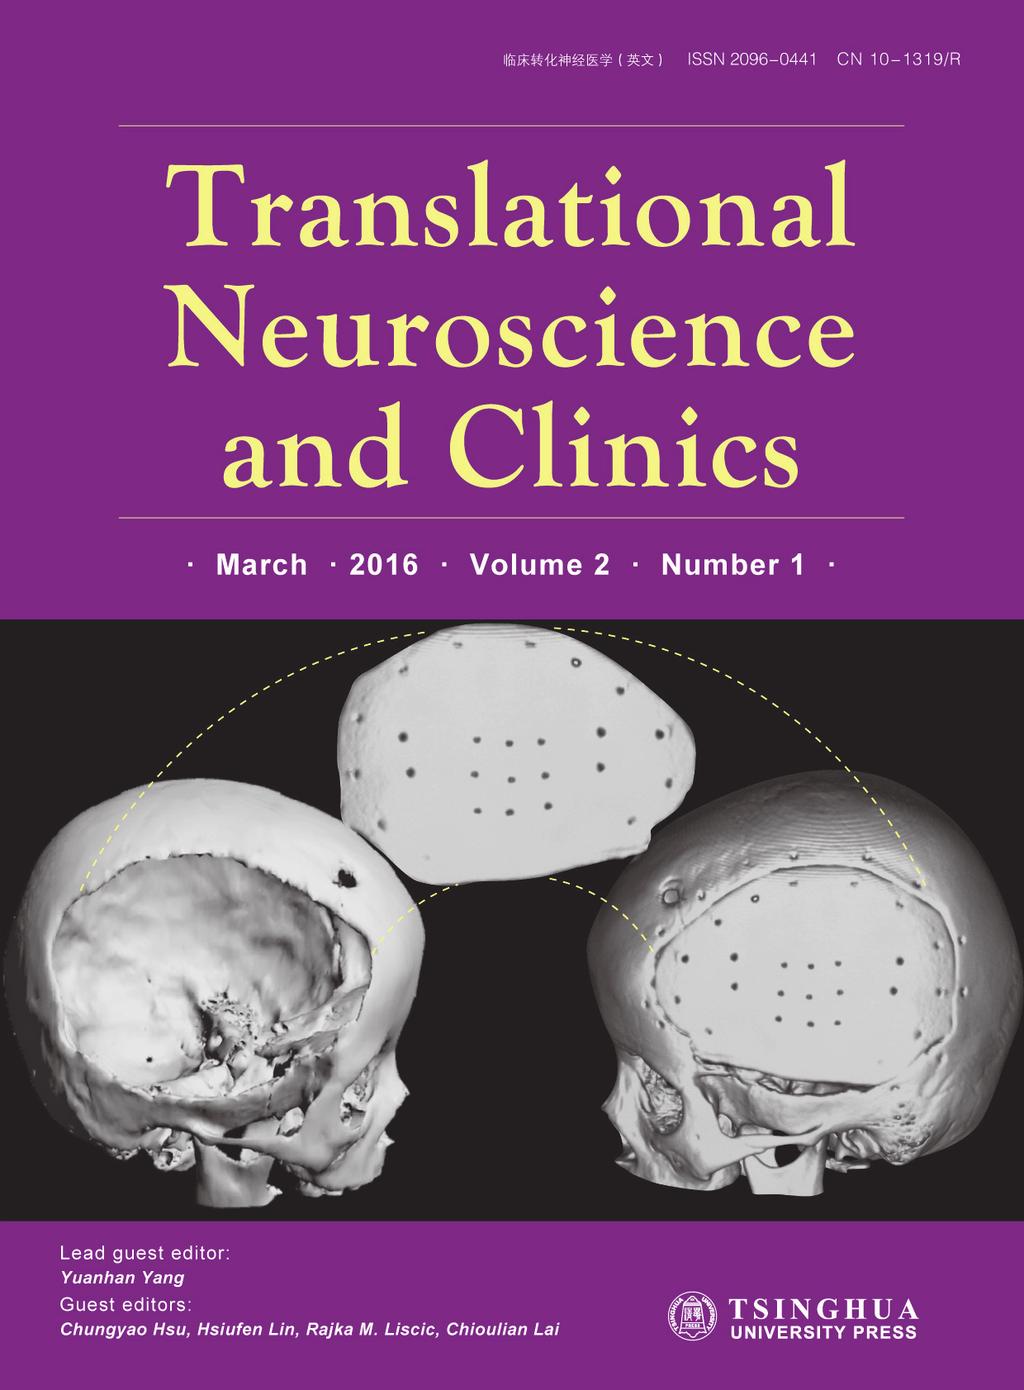 Translational Neuroscience and Clinics ISSN print edition: 2096-0441 ISSN electronic edition: 2096-0670 CN print edition: 10-1319/R CN electronic edition: 11-6030/R DOI Vol. 2, No.